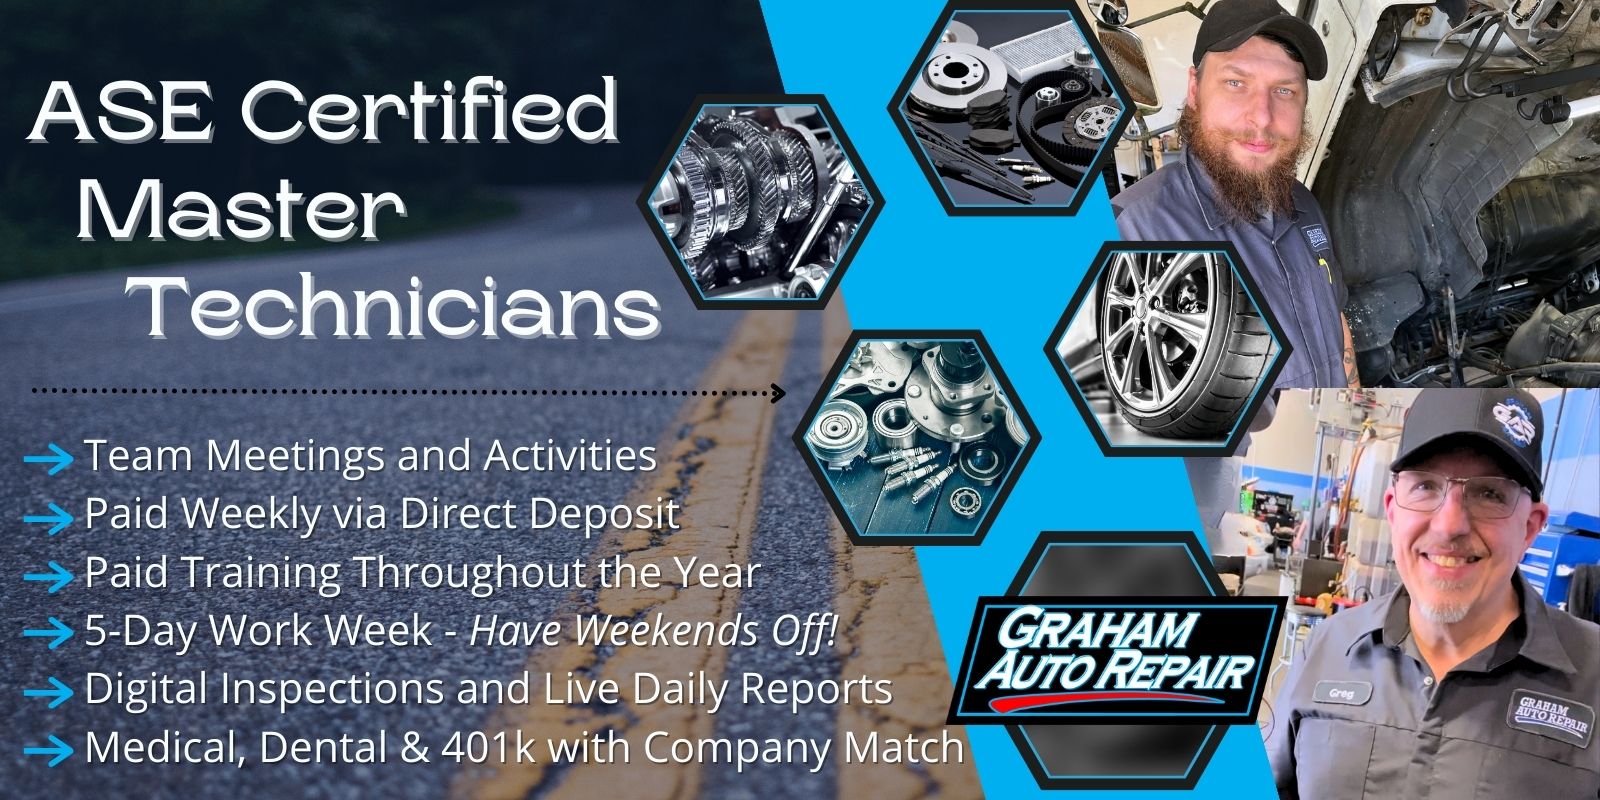 ASE Certified Master Technician Job at Graham Auto Repair